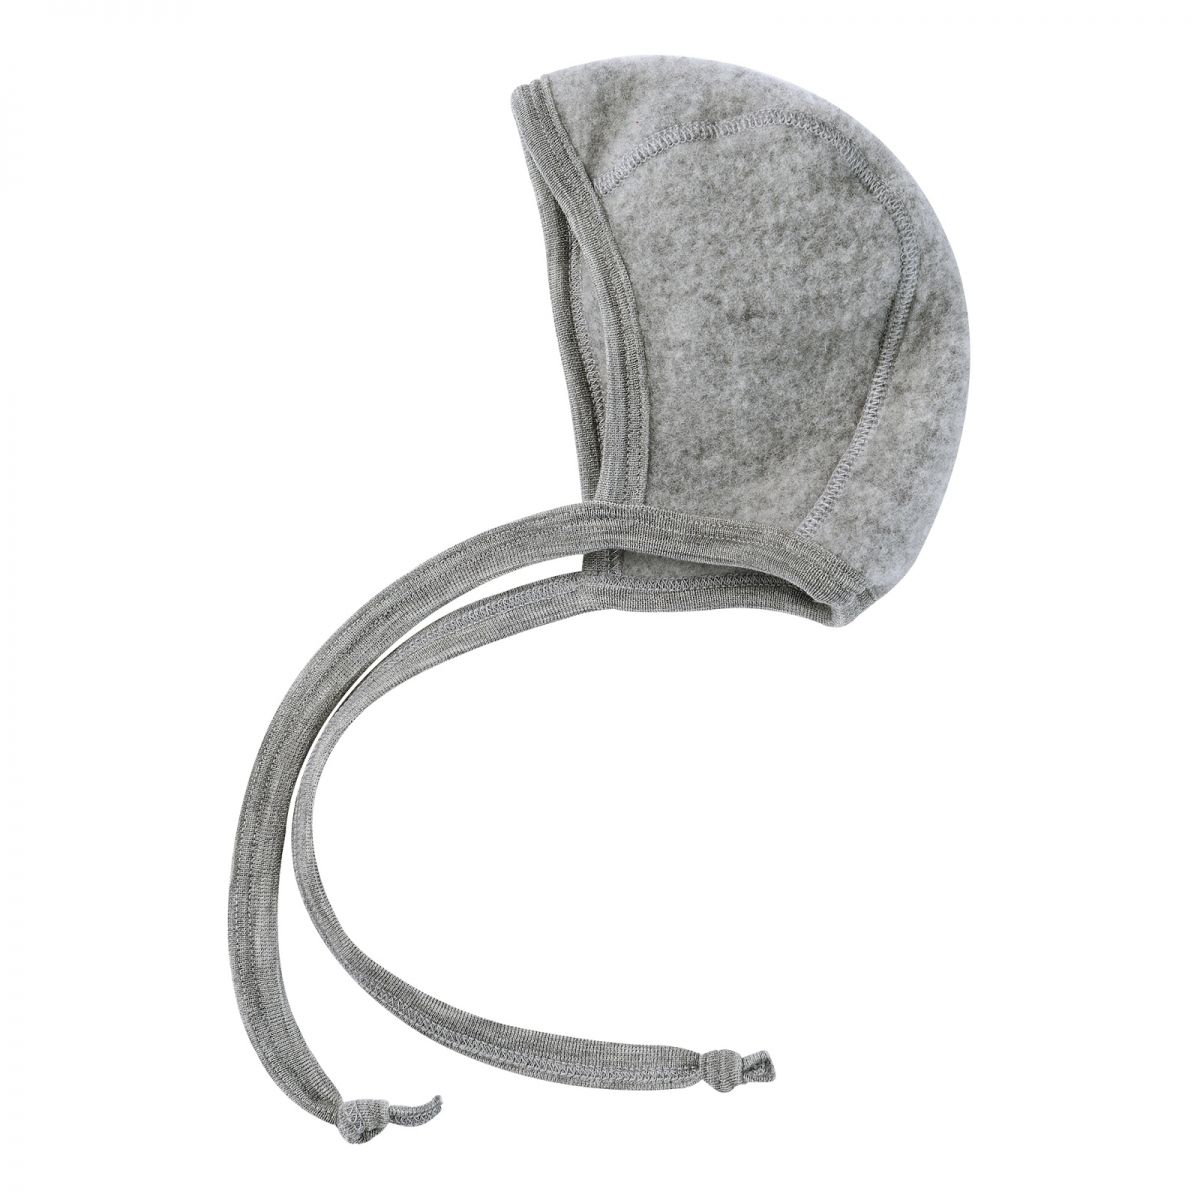 ENGEL Natur Baby-bonnet light Grey melange 575550-091 